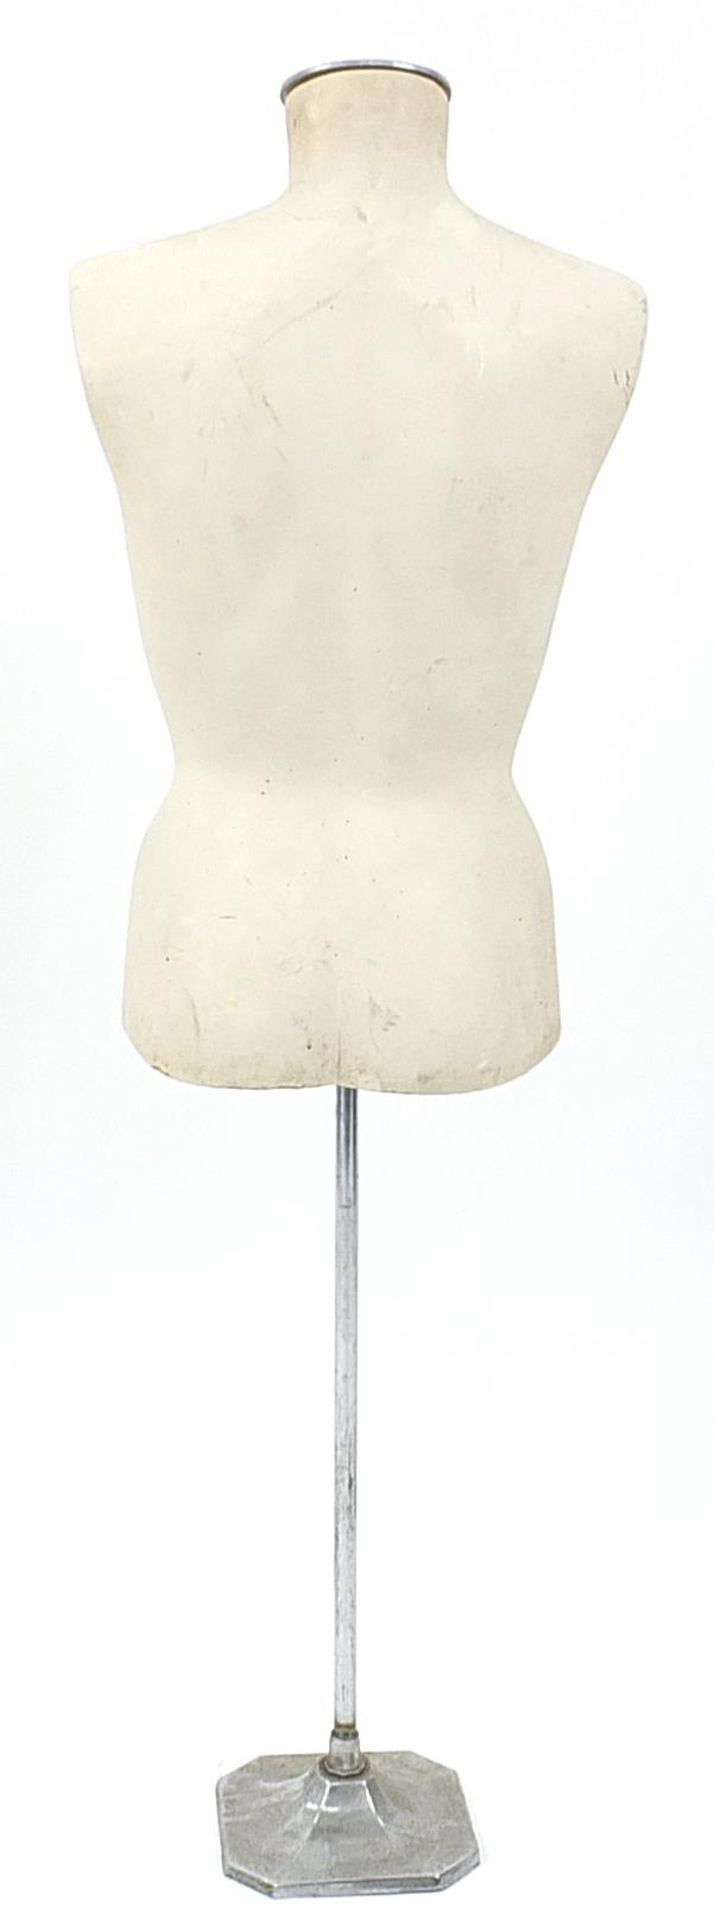 1970's dressmaker's dummy on stand, 121cm high - Image 2 of 2